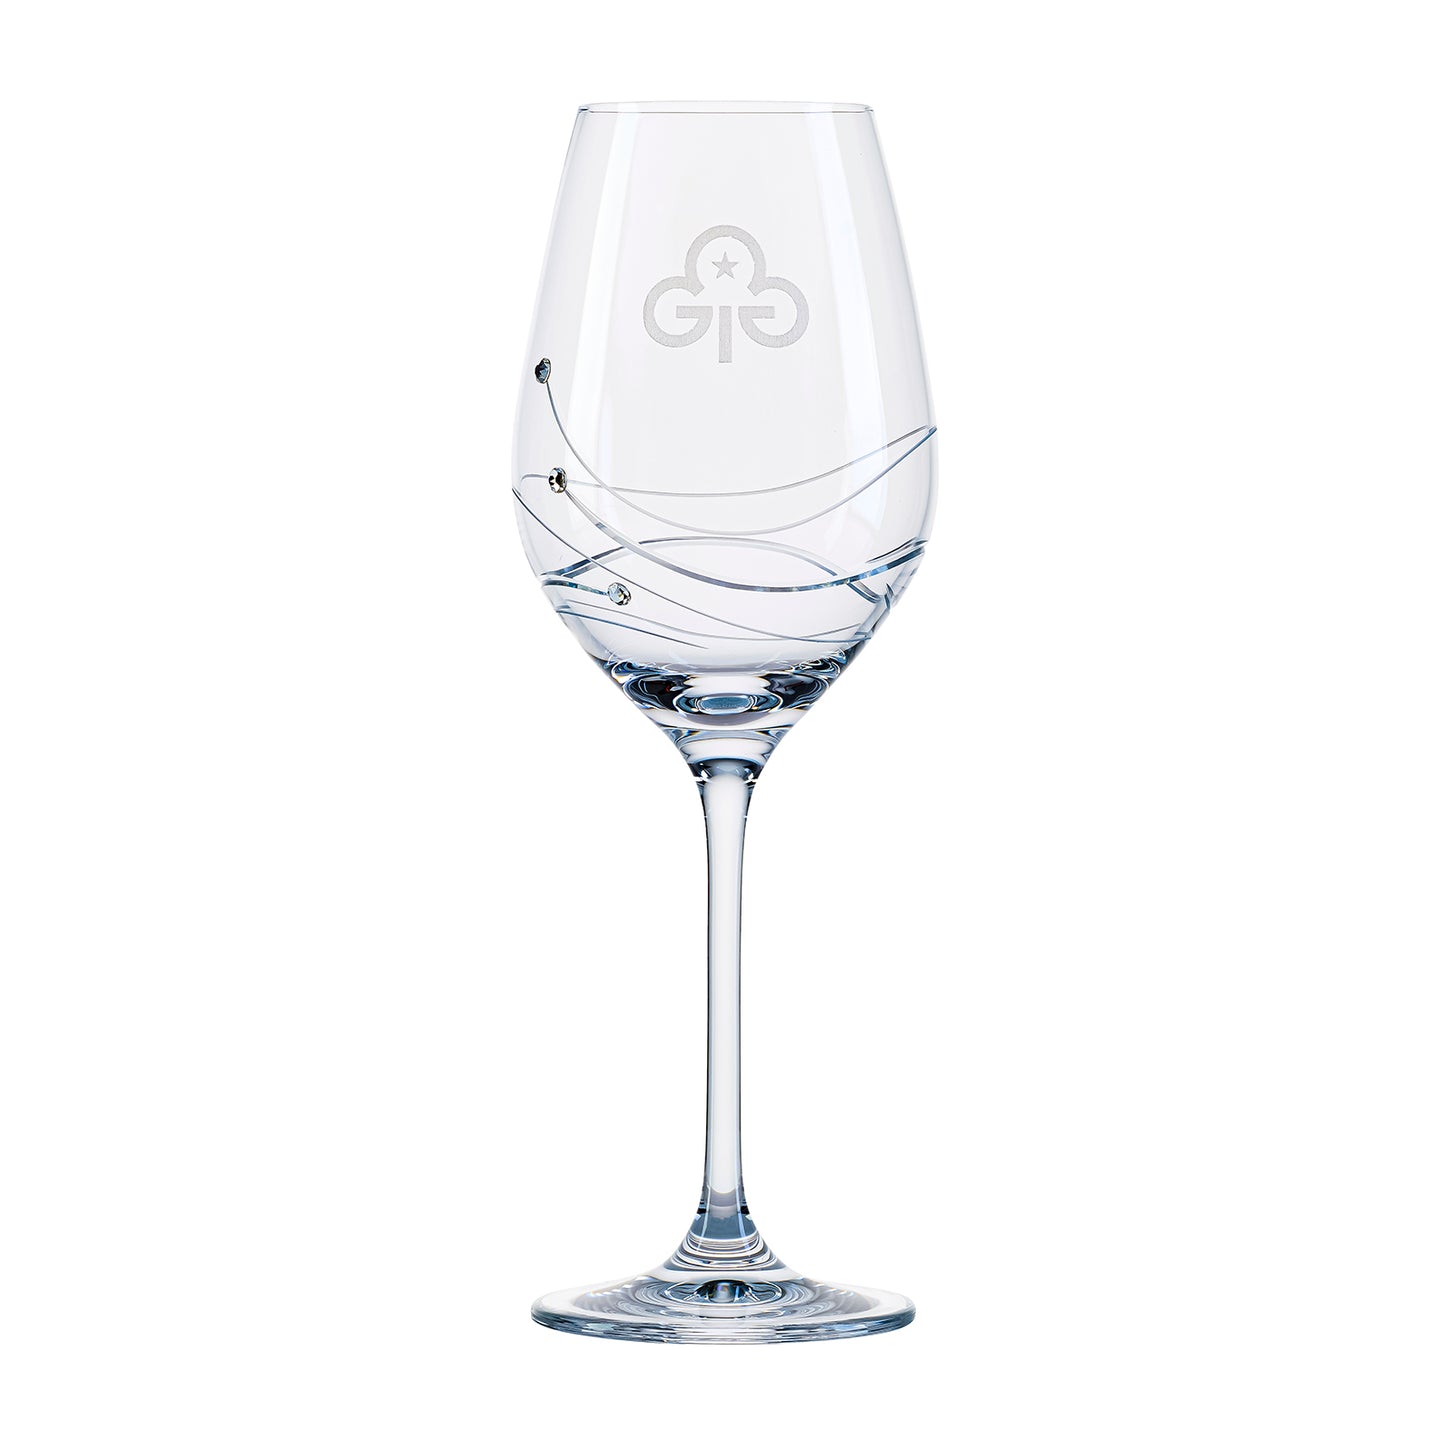 Glitz Wine Glass - Single